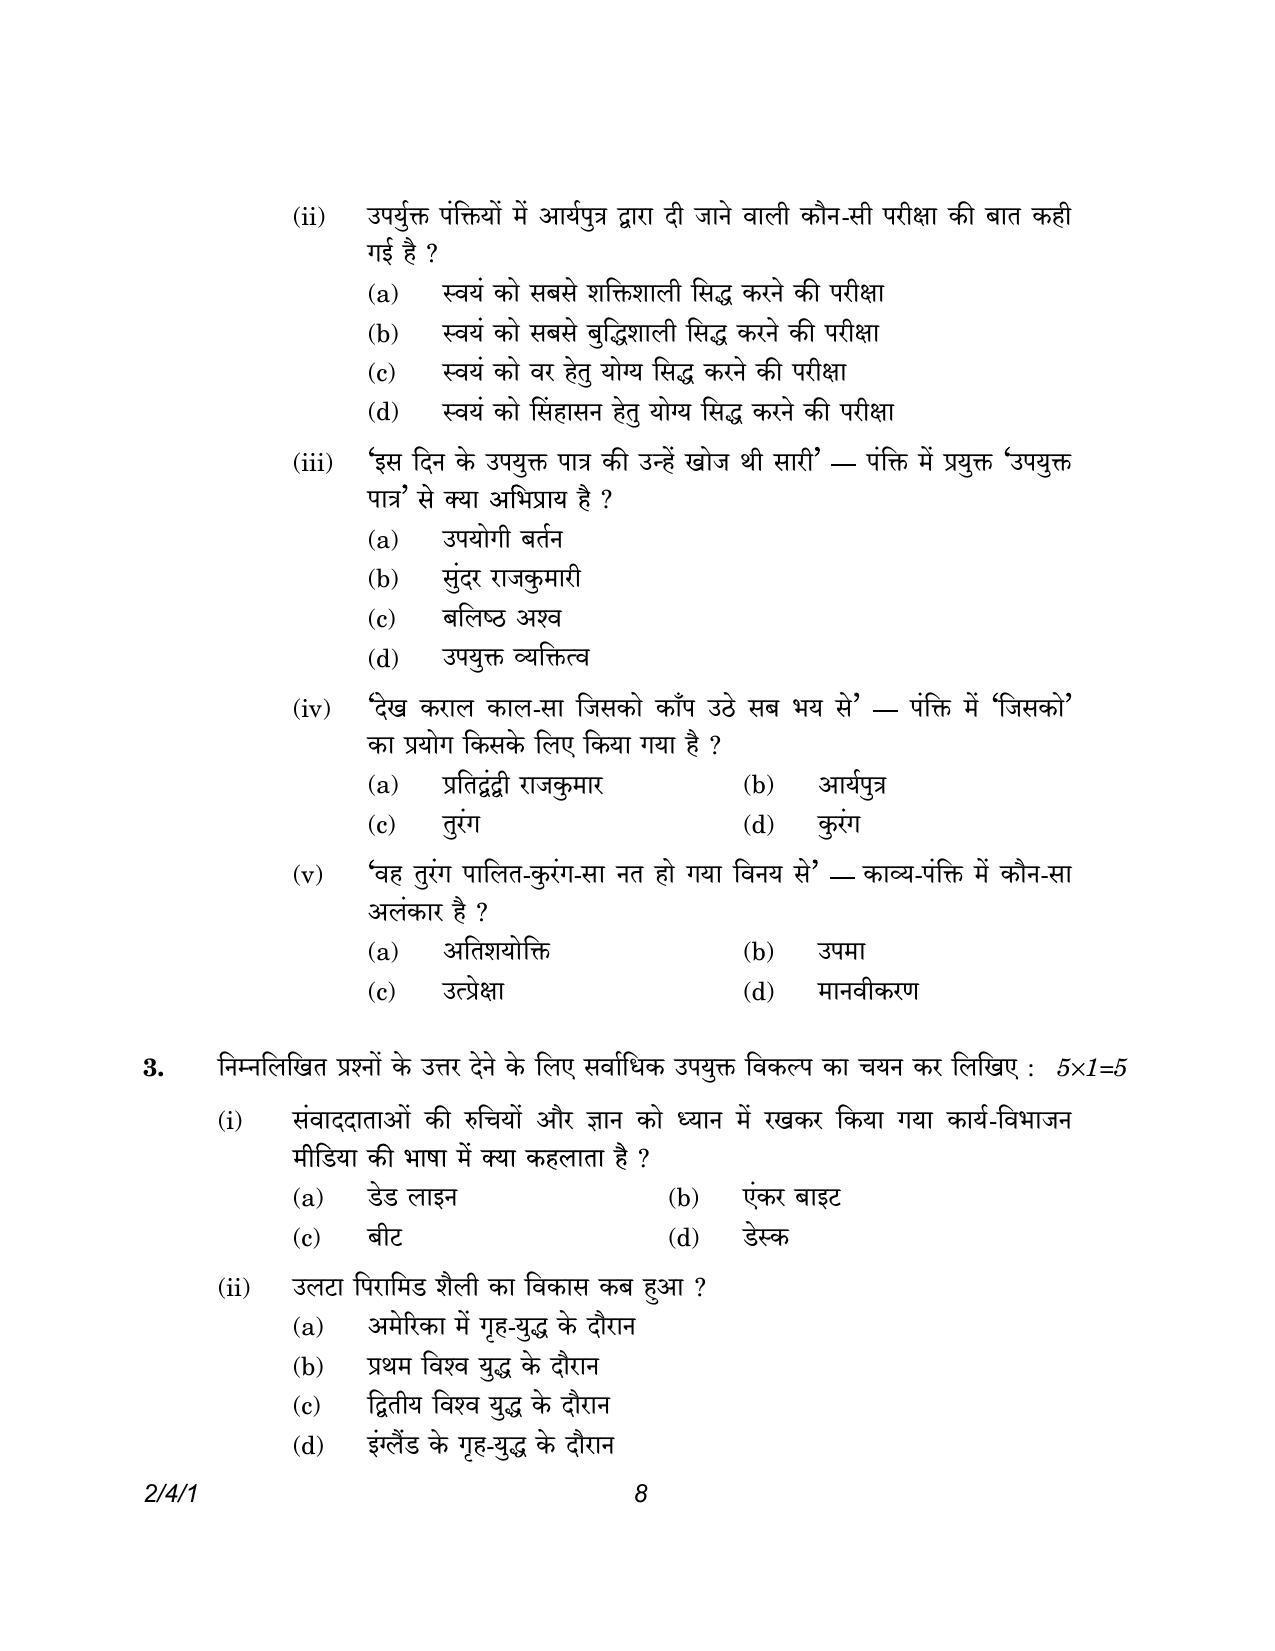 CBSE Class 12 2-4-1 Hindi Core version 2023 Question Paper - Page 8